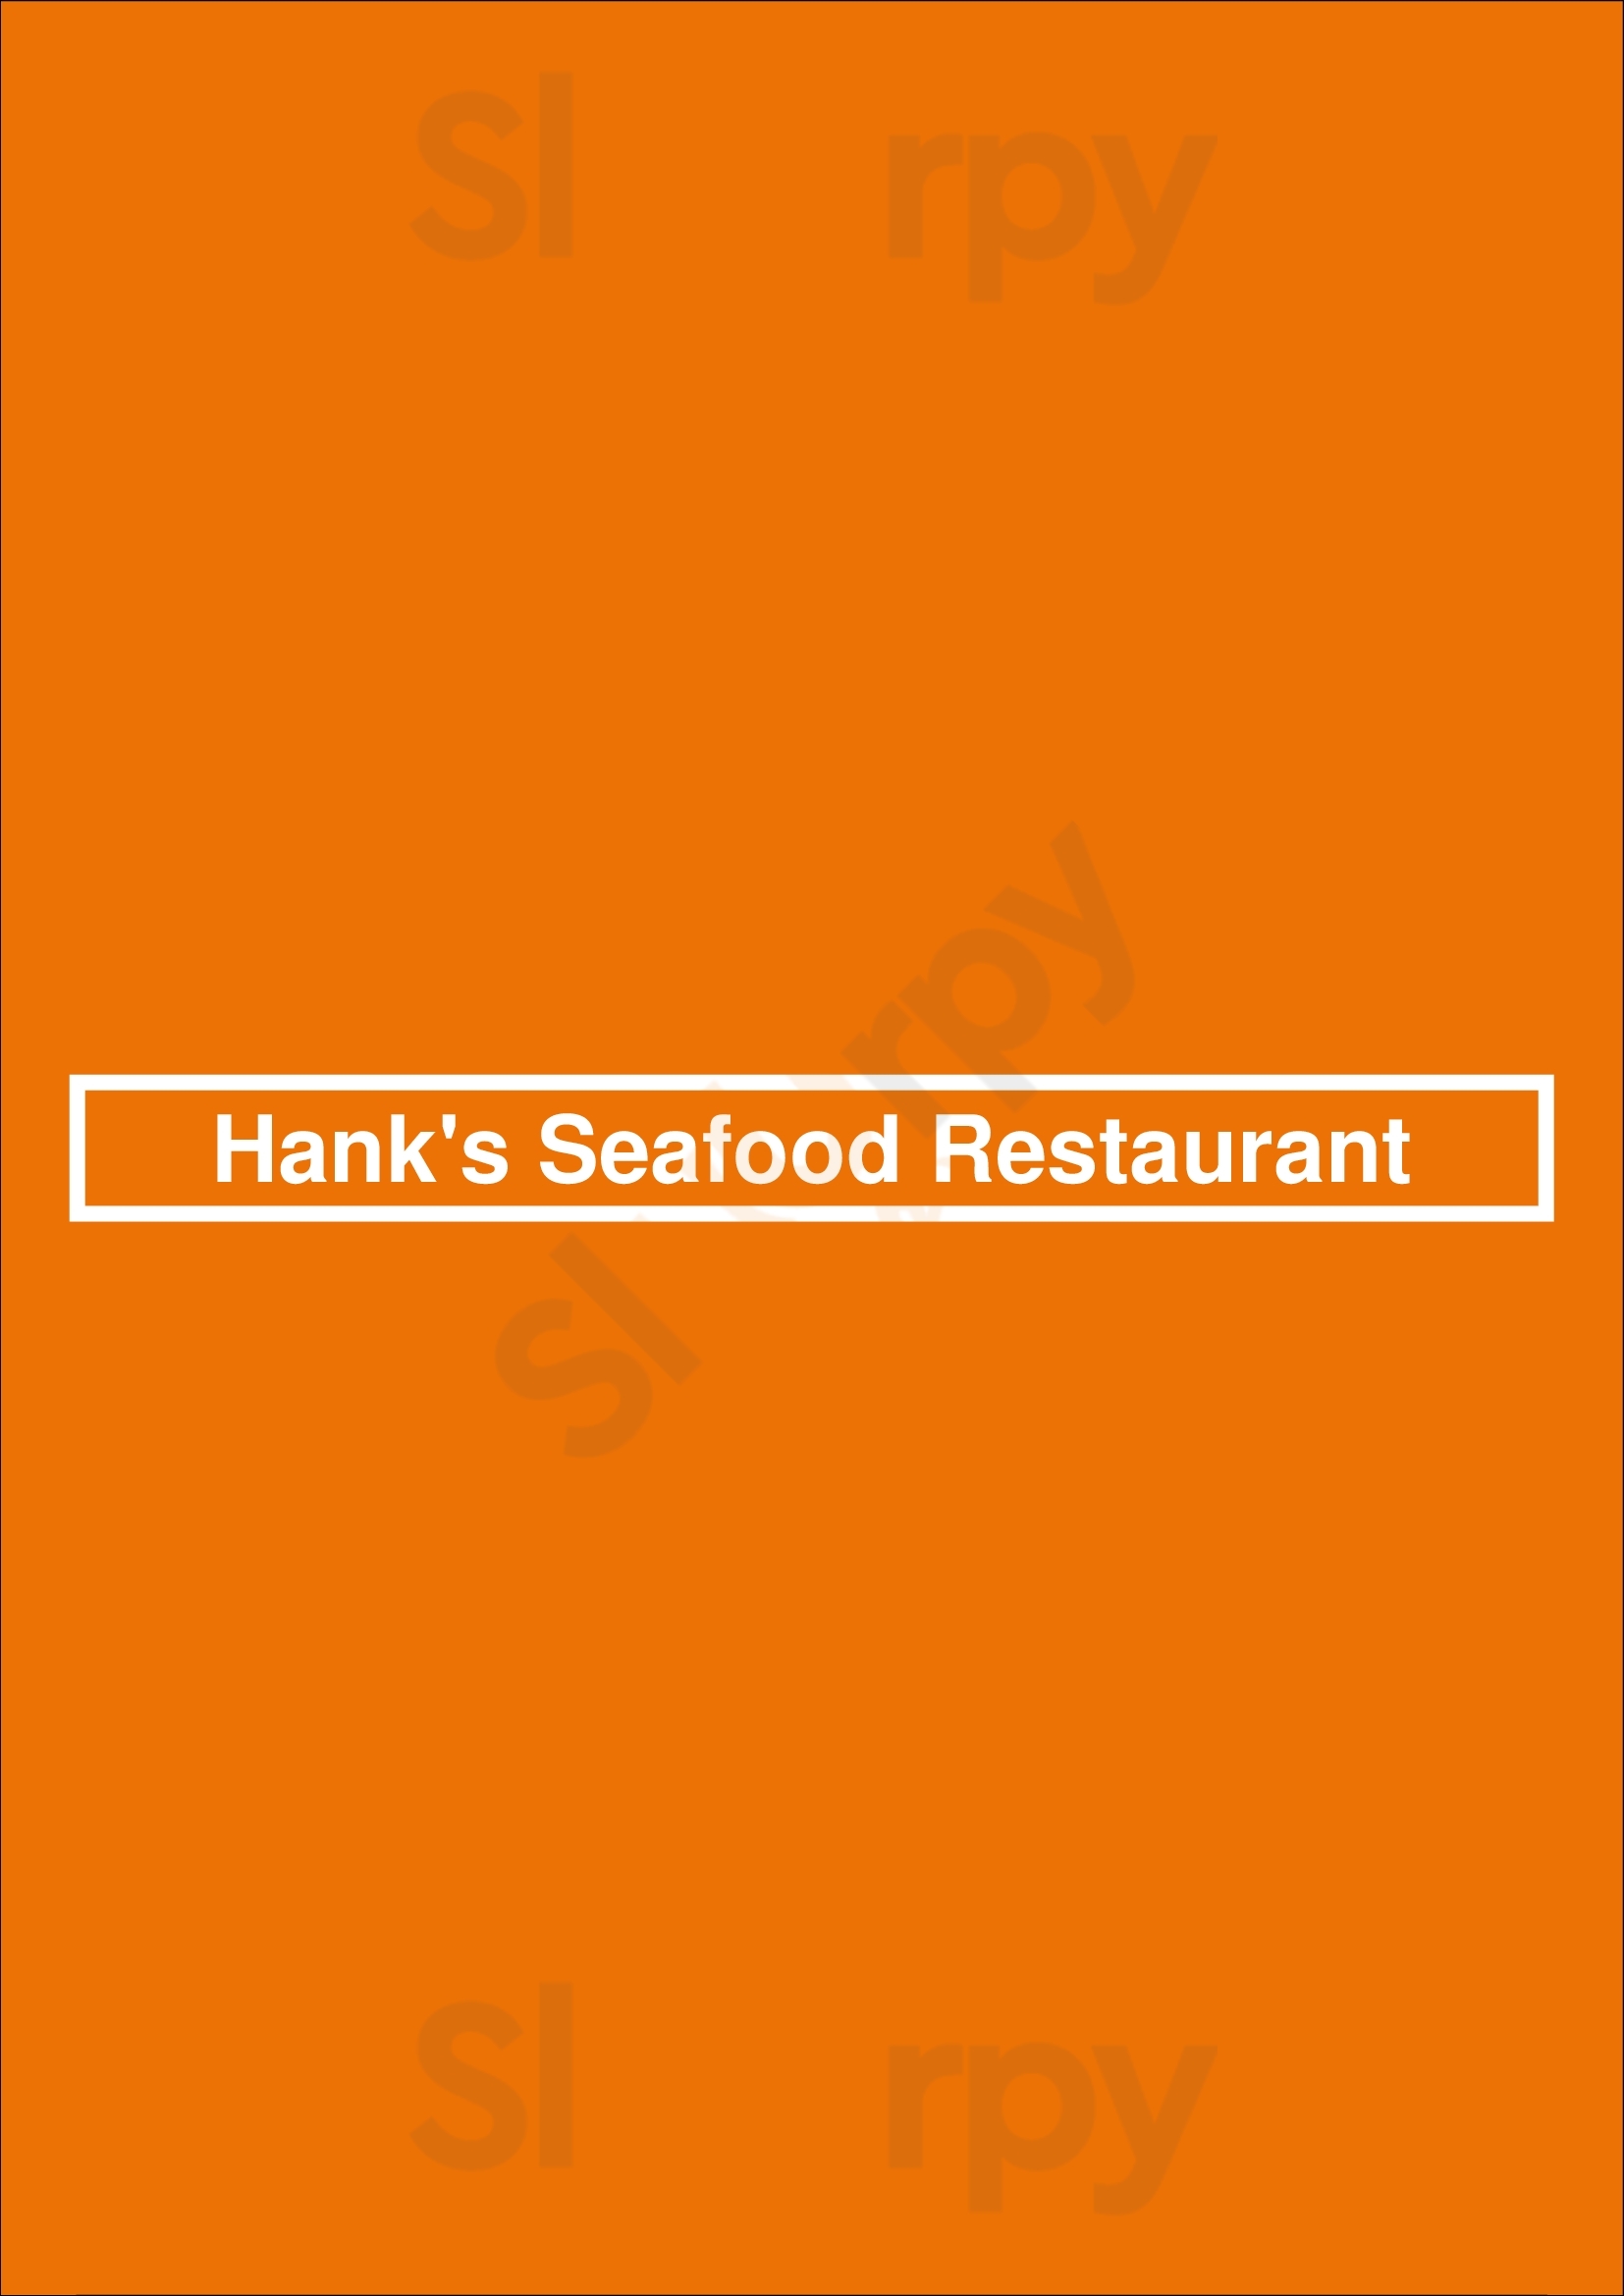 Hank's Seafood Restaurant Charleston Menu - 1